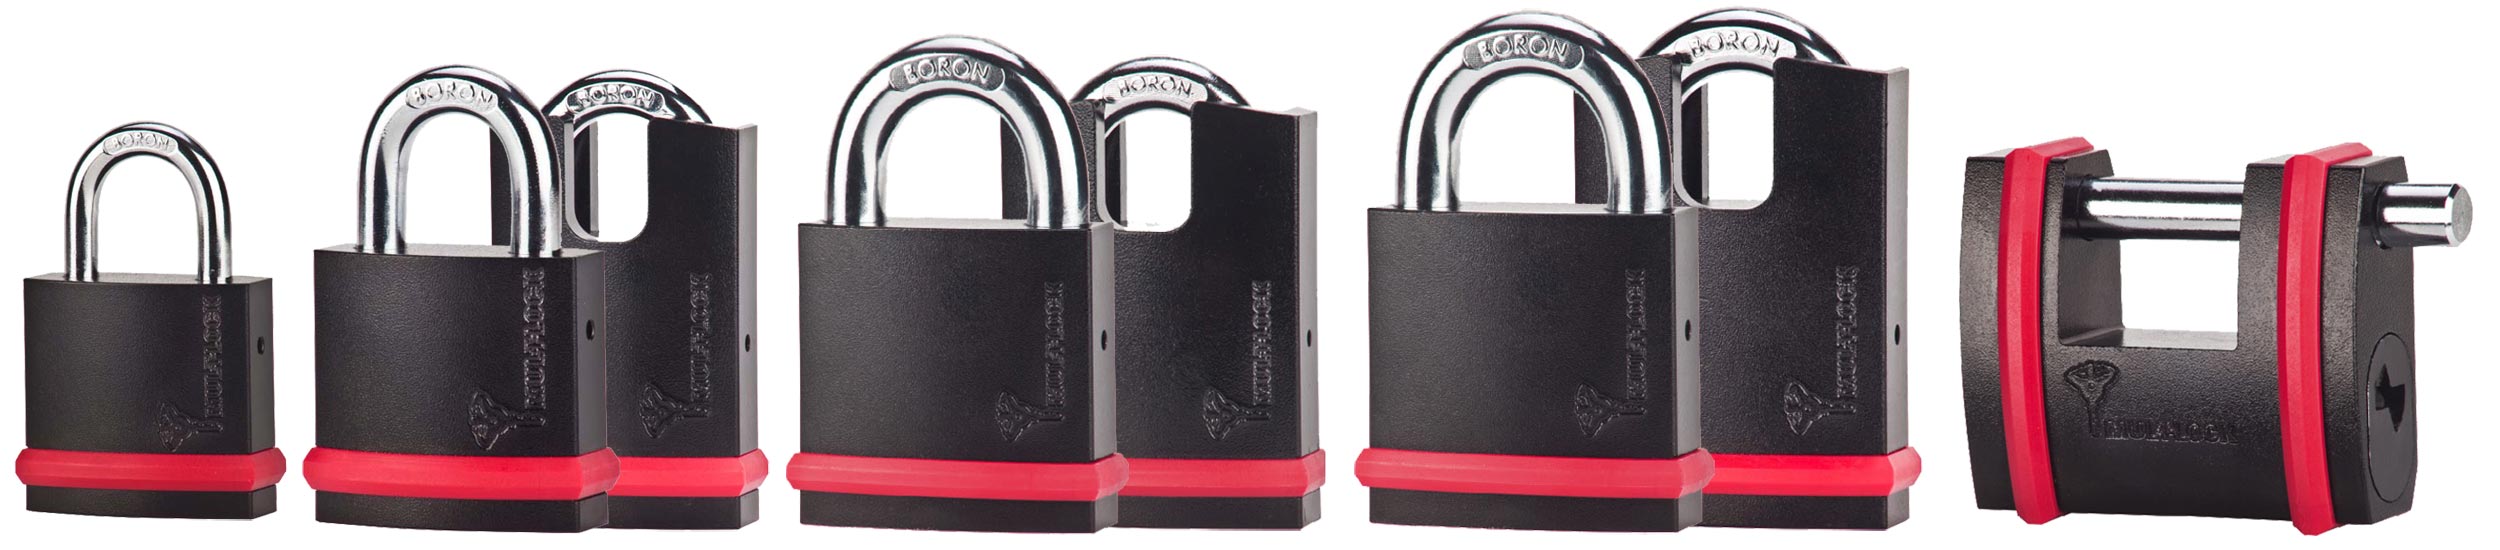 Mul-T-Lock high security padlocks